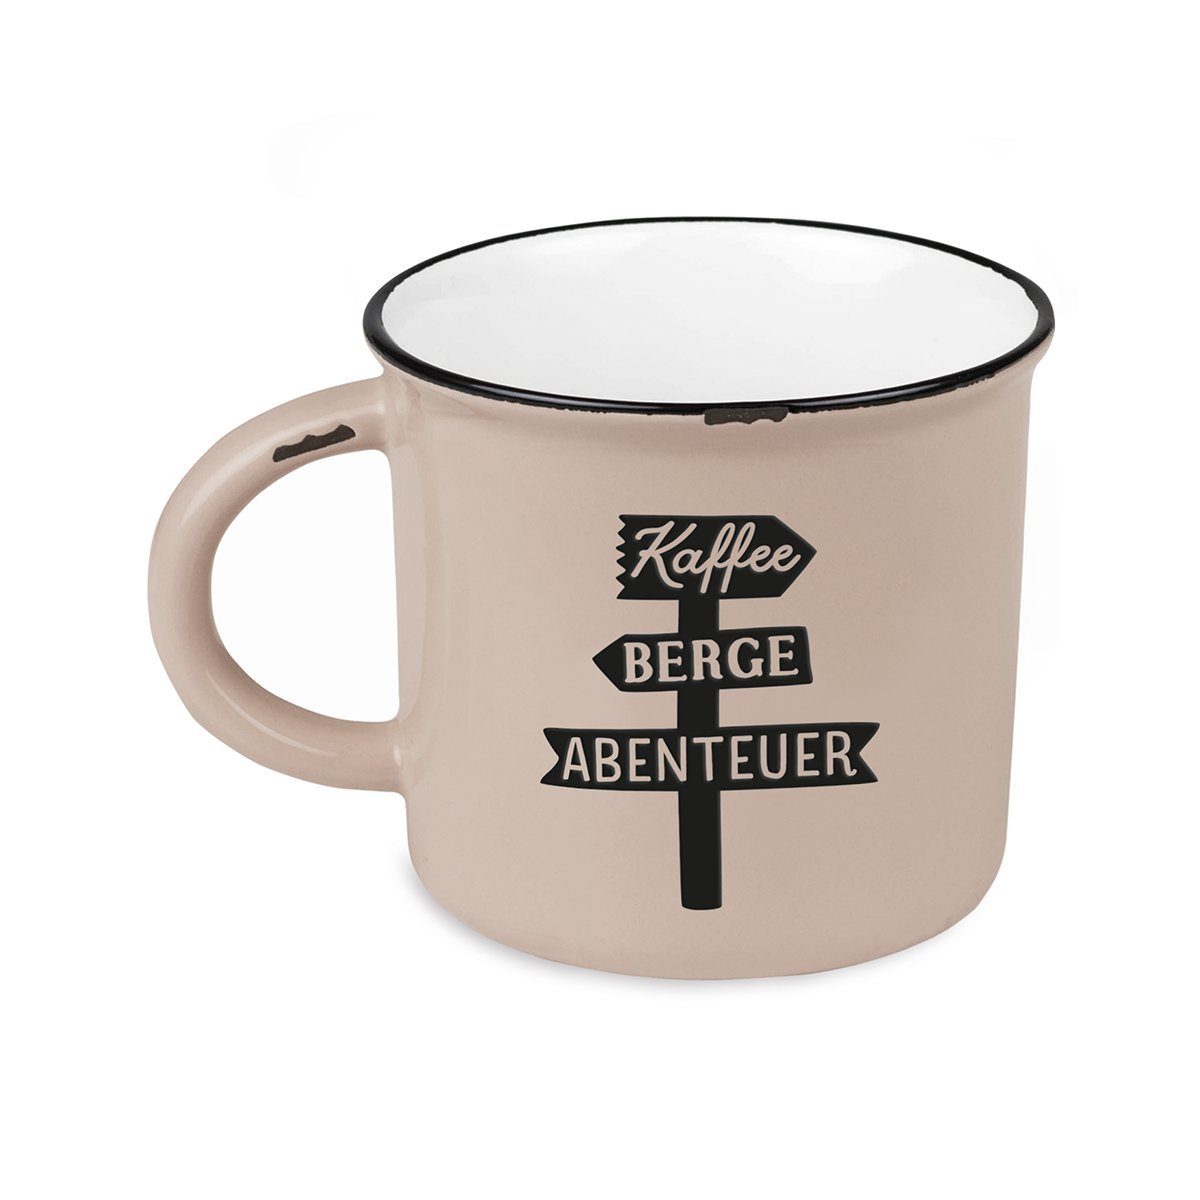 Grafik Werkstatt Tasse Vintage-Tasse Emaille-Look Keramik Berge Abenteuer, Kaffee Bergglück im